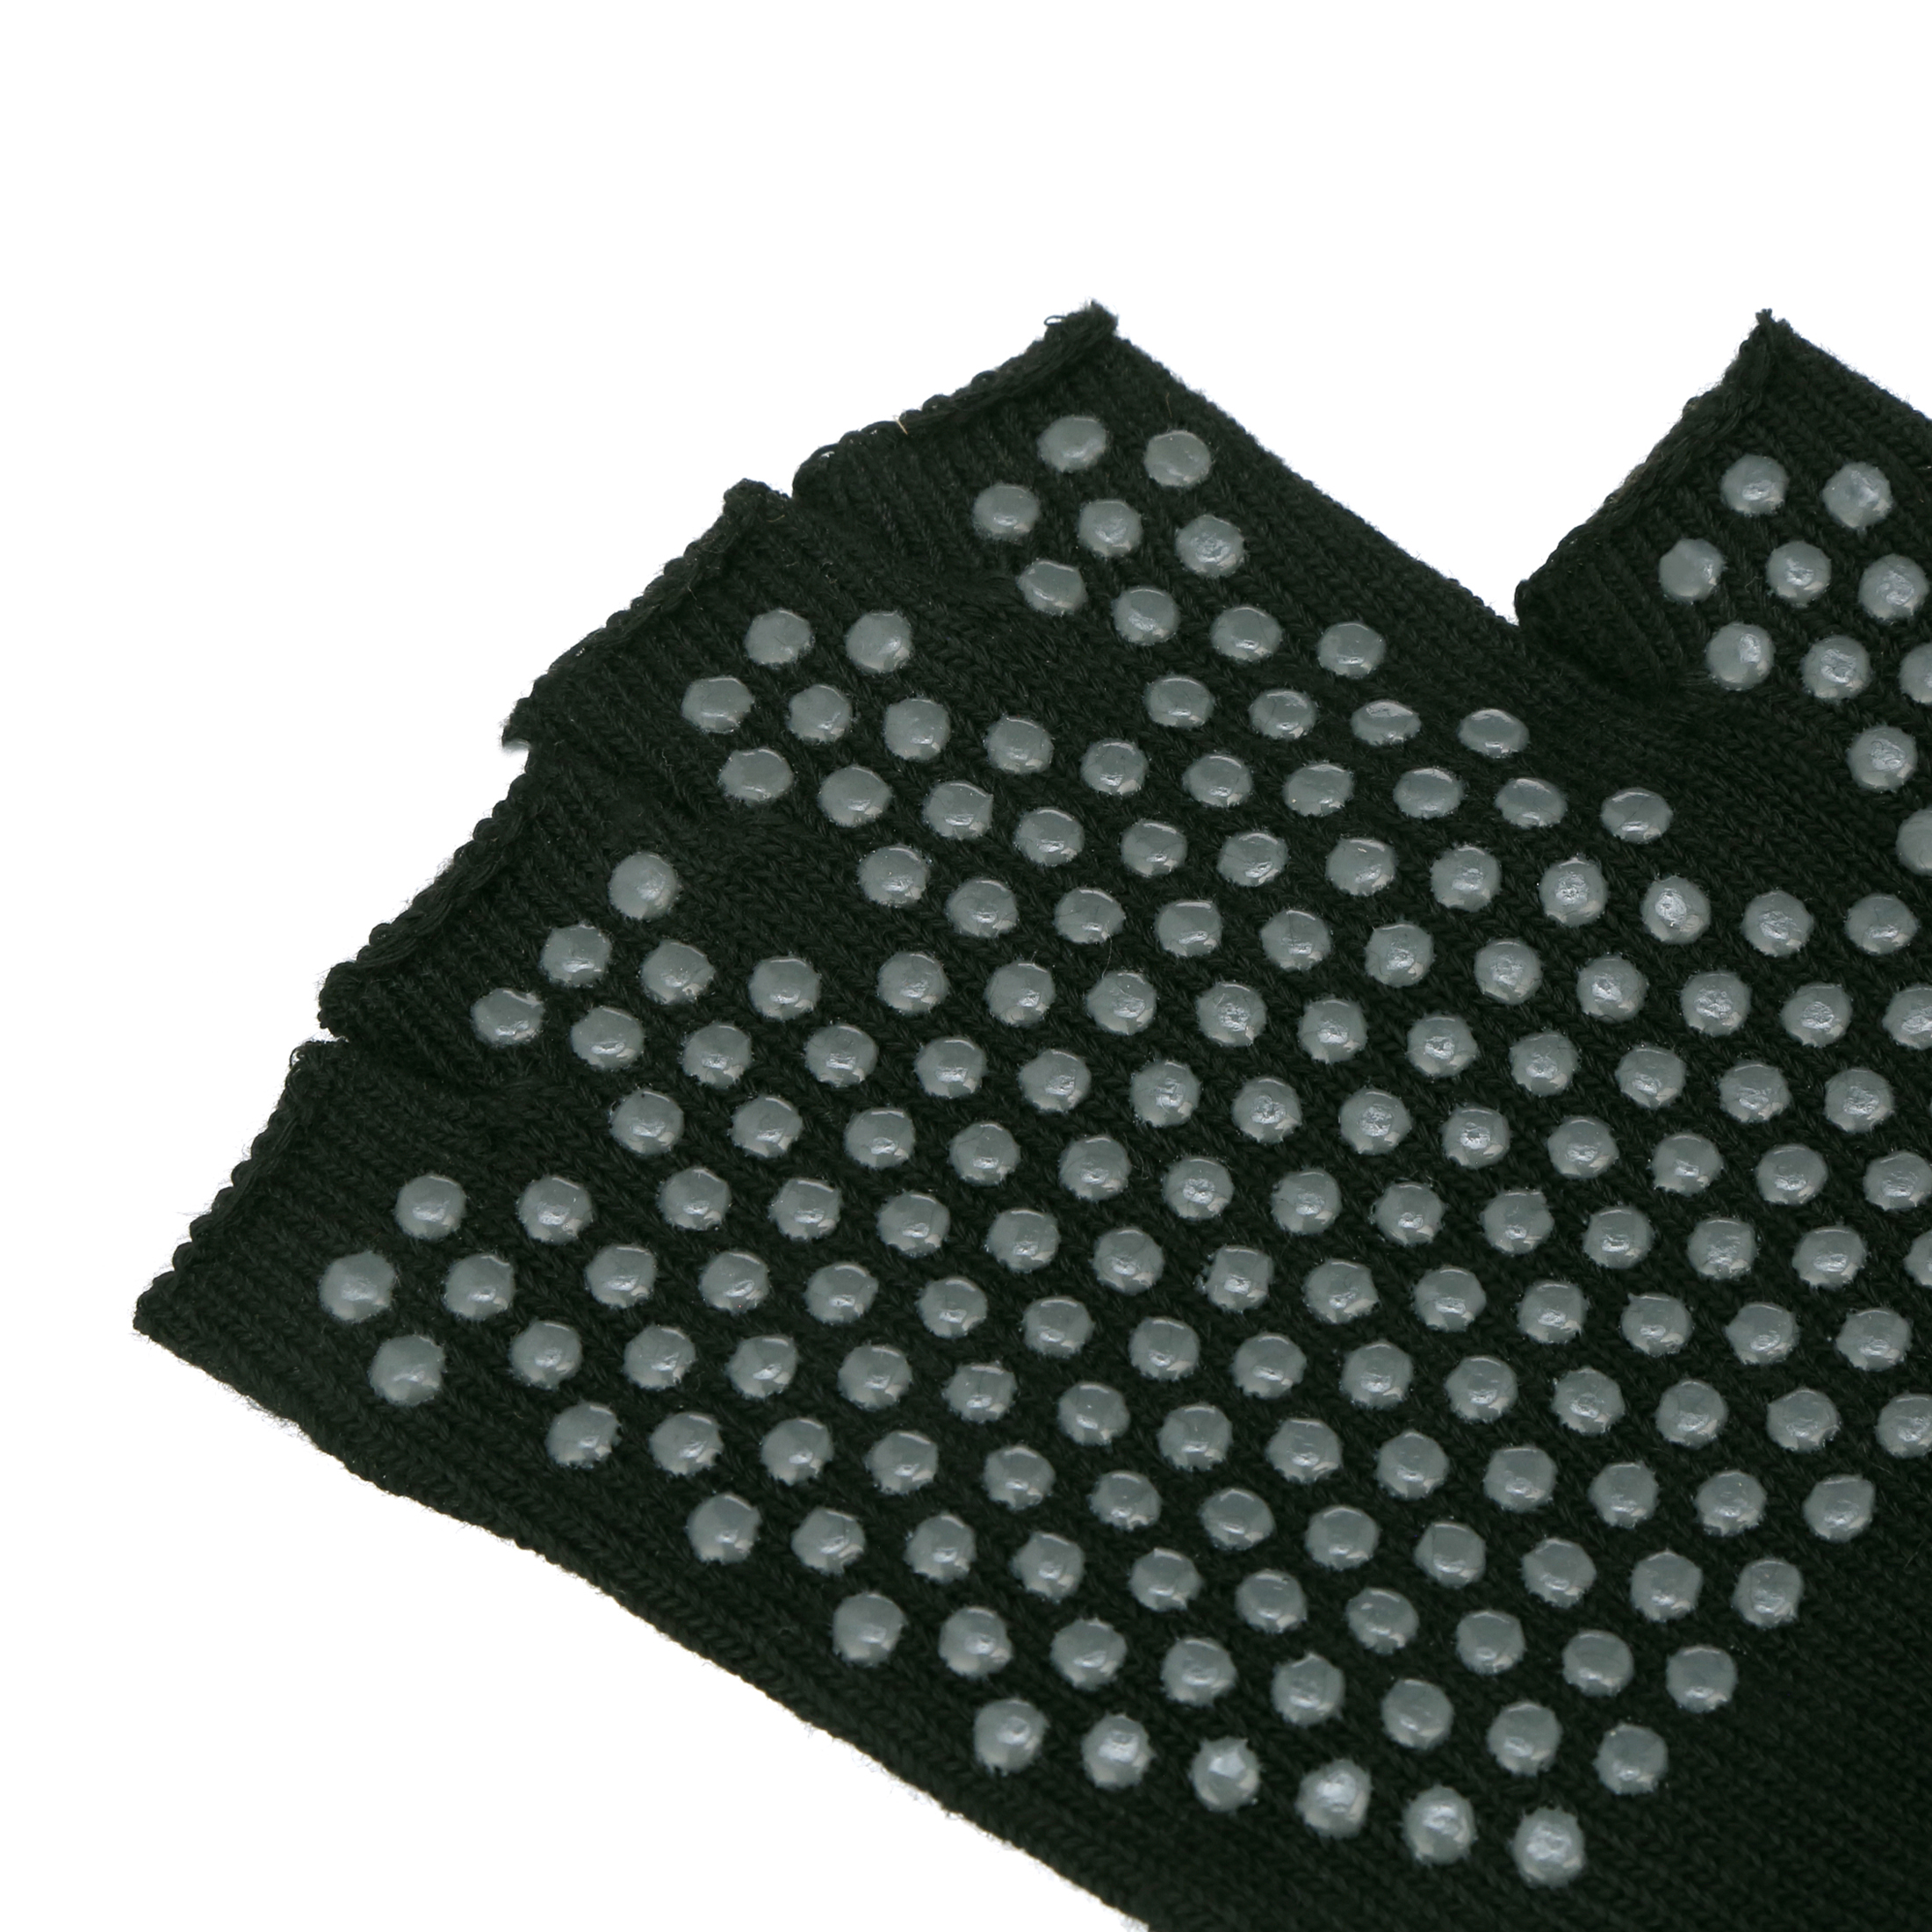 Gaiam Grippy Yoga Gloves, Small/Medium, One-Size, Black - image 6 of 9